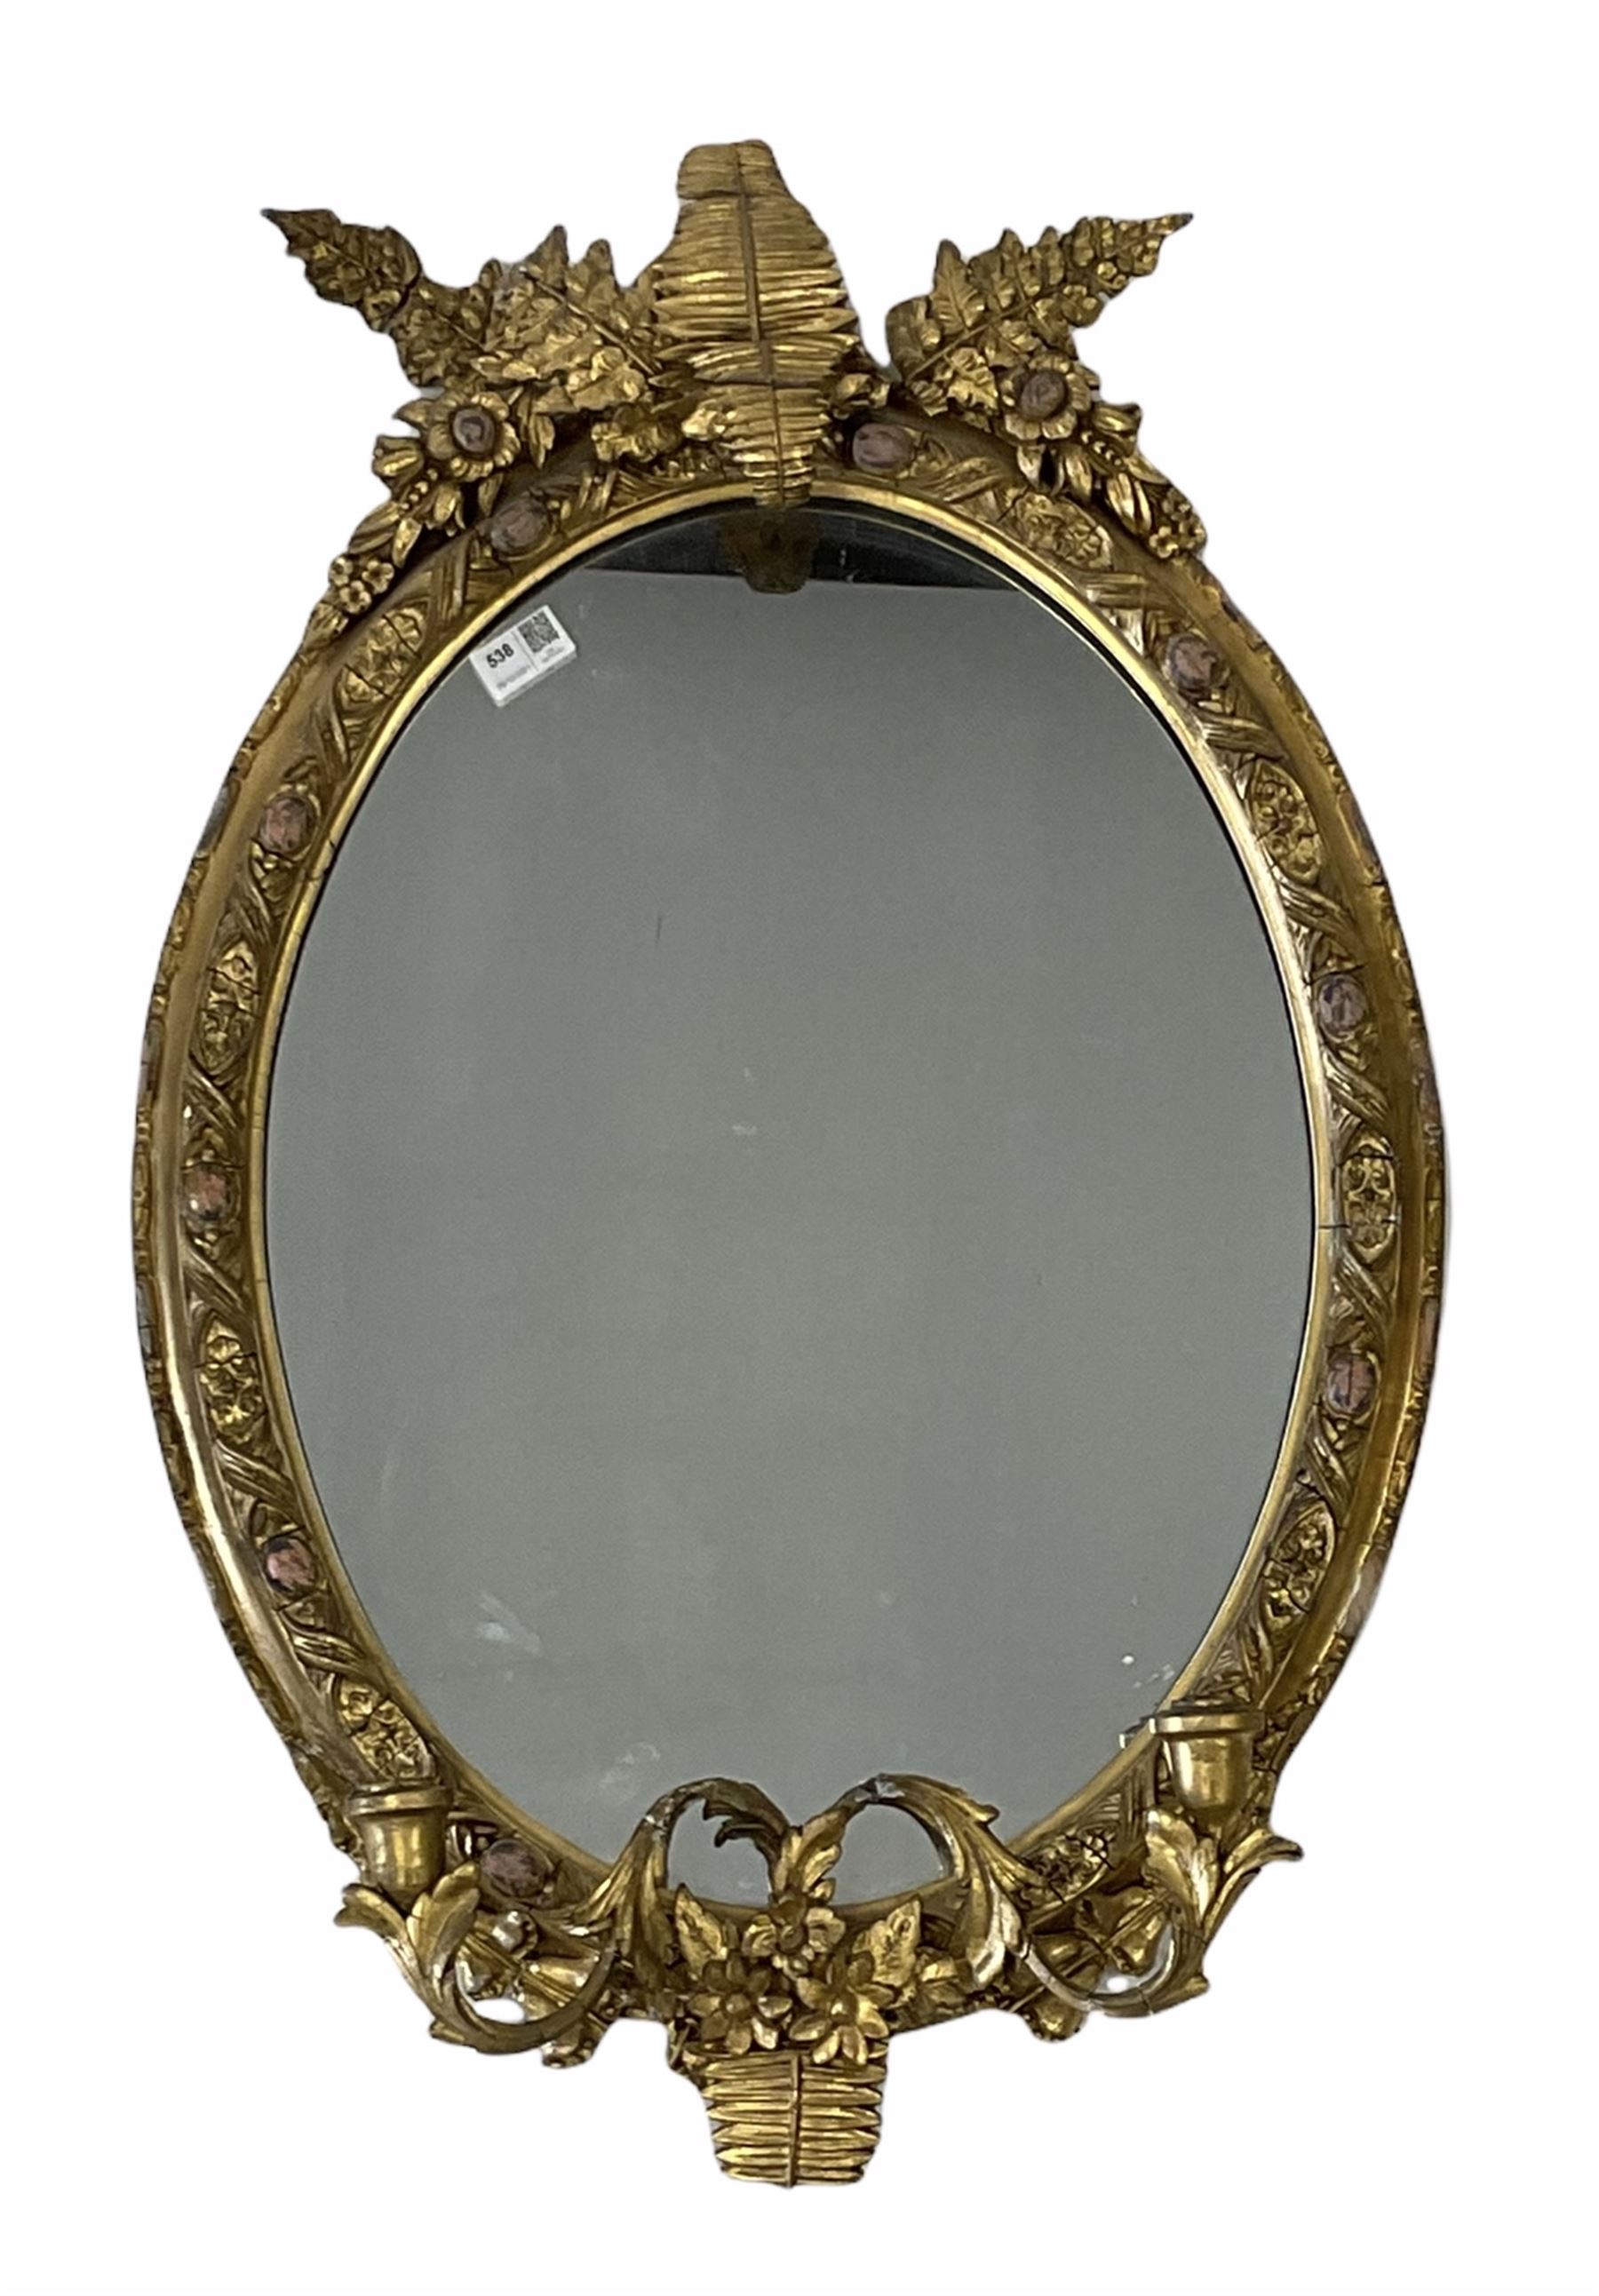 19th century giltwood and gesso girandole oval wall mirror